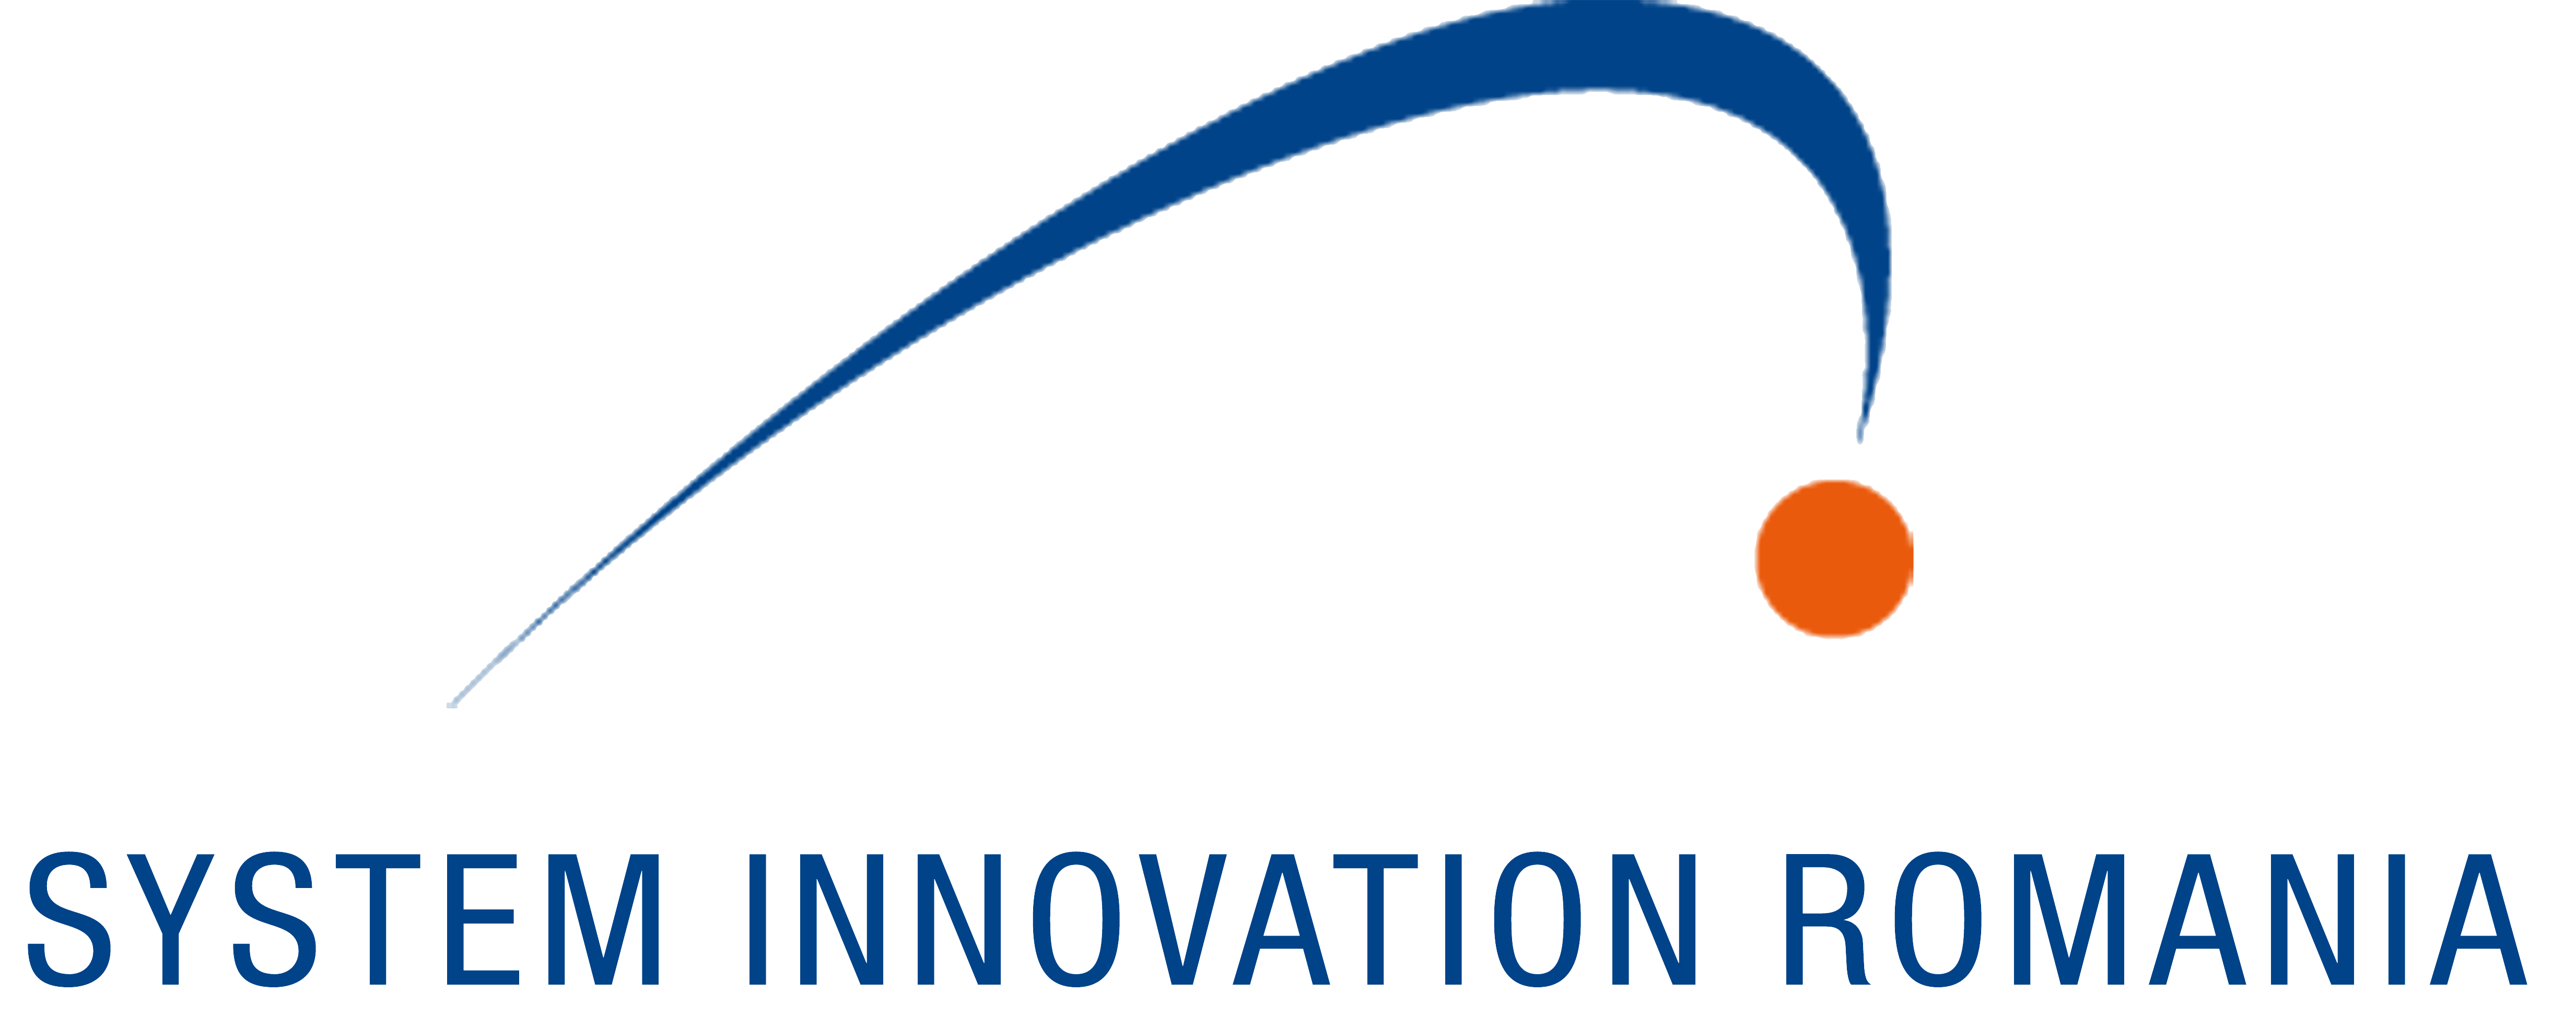 System Innovation Romania